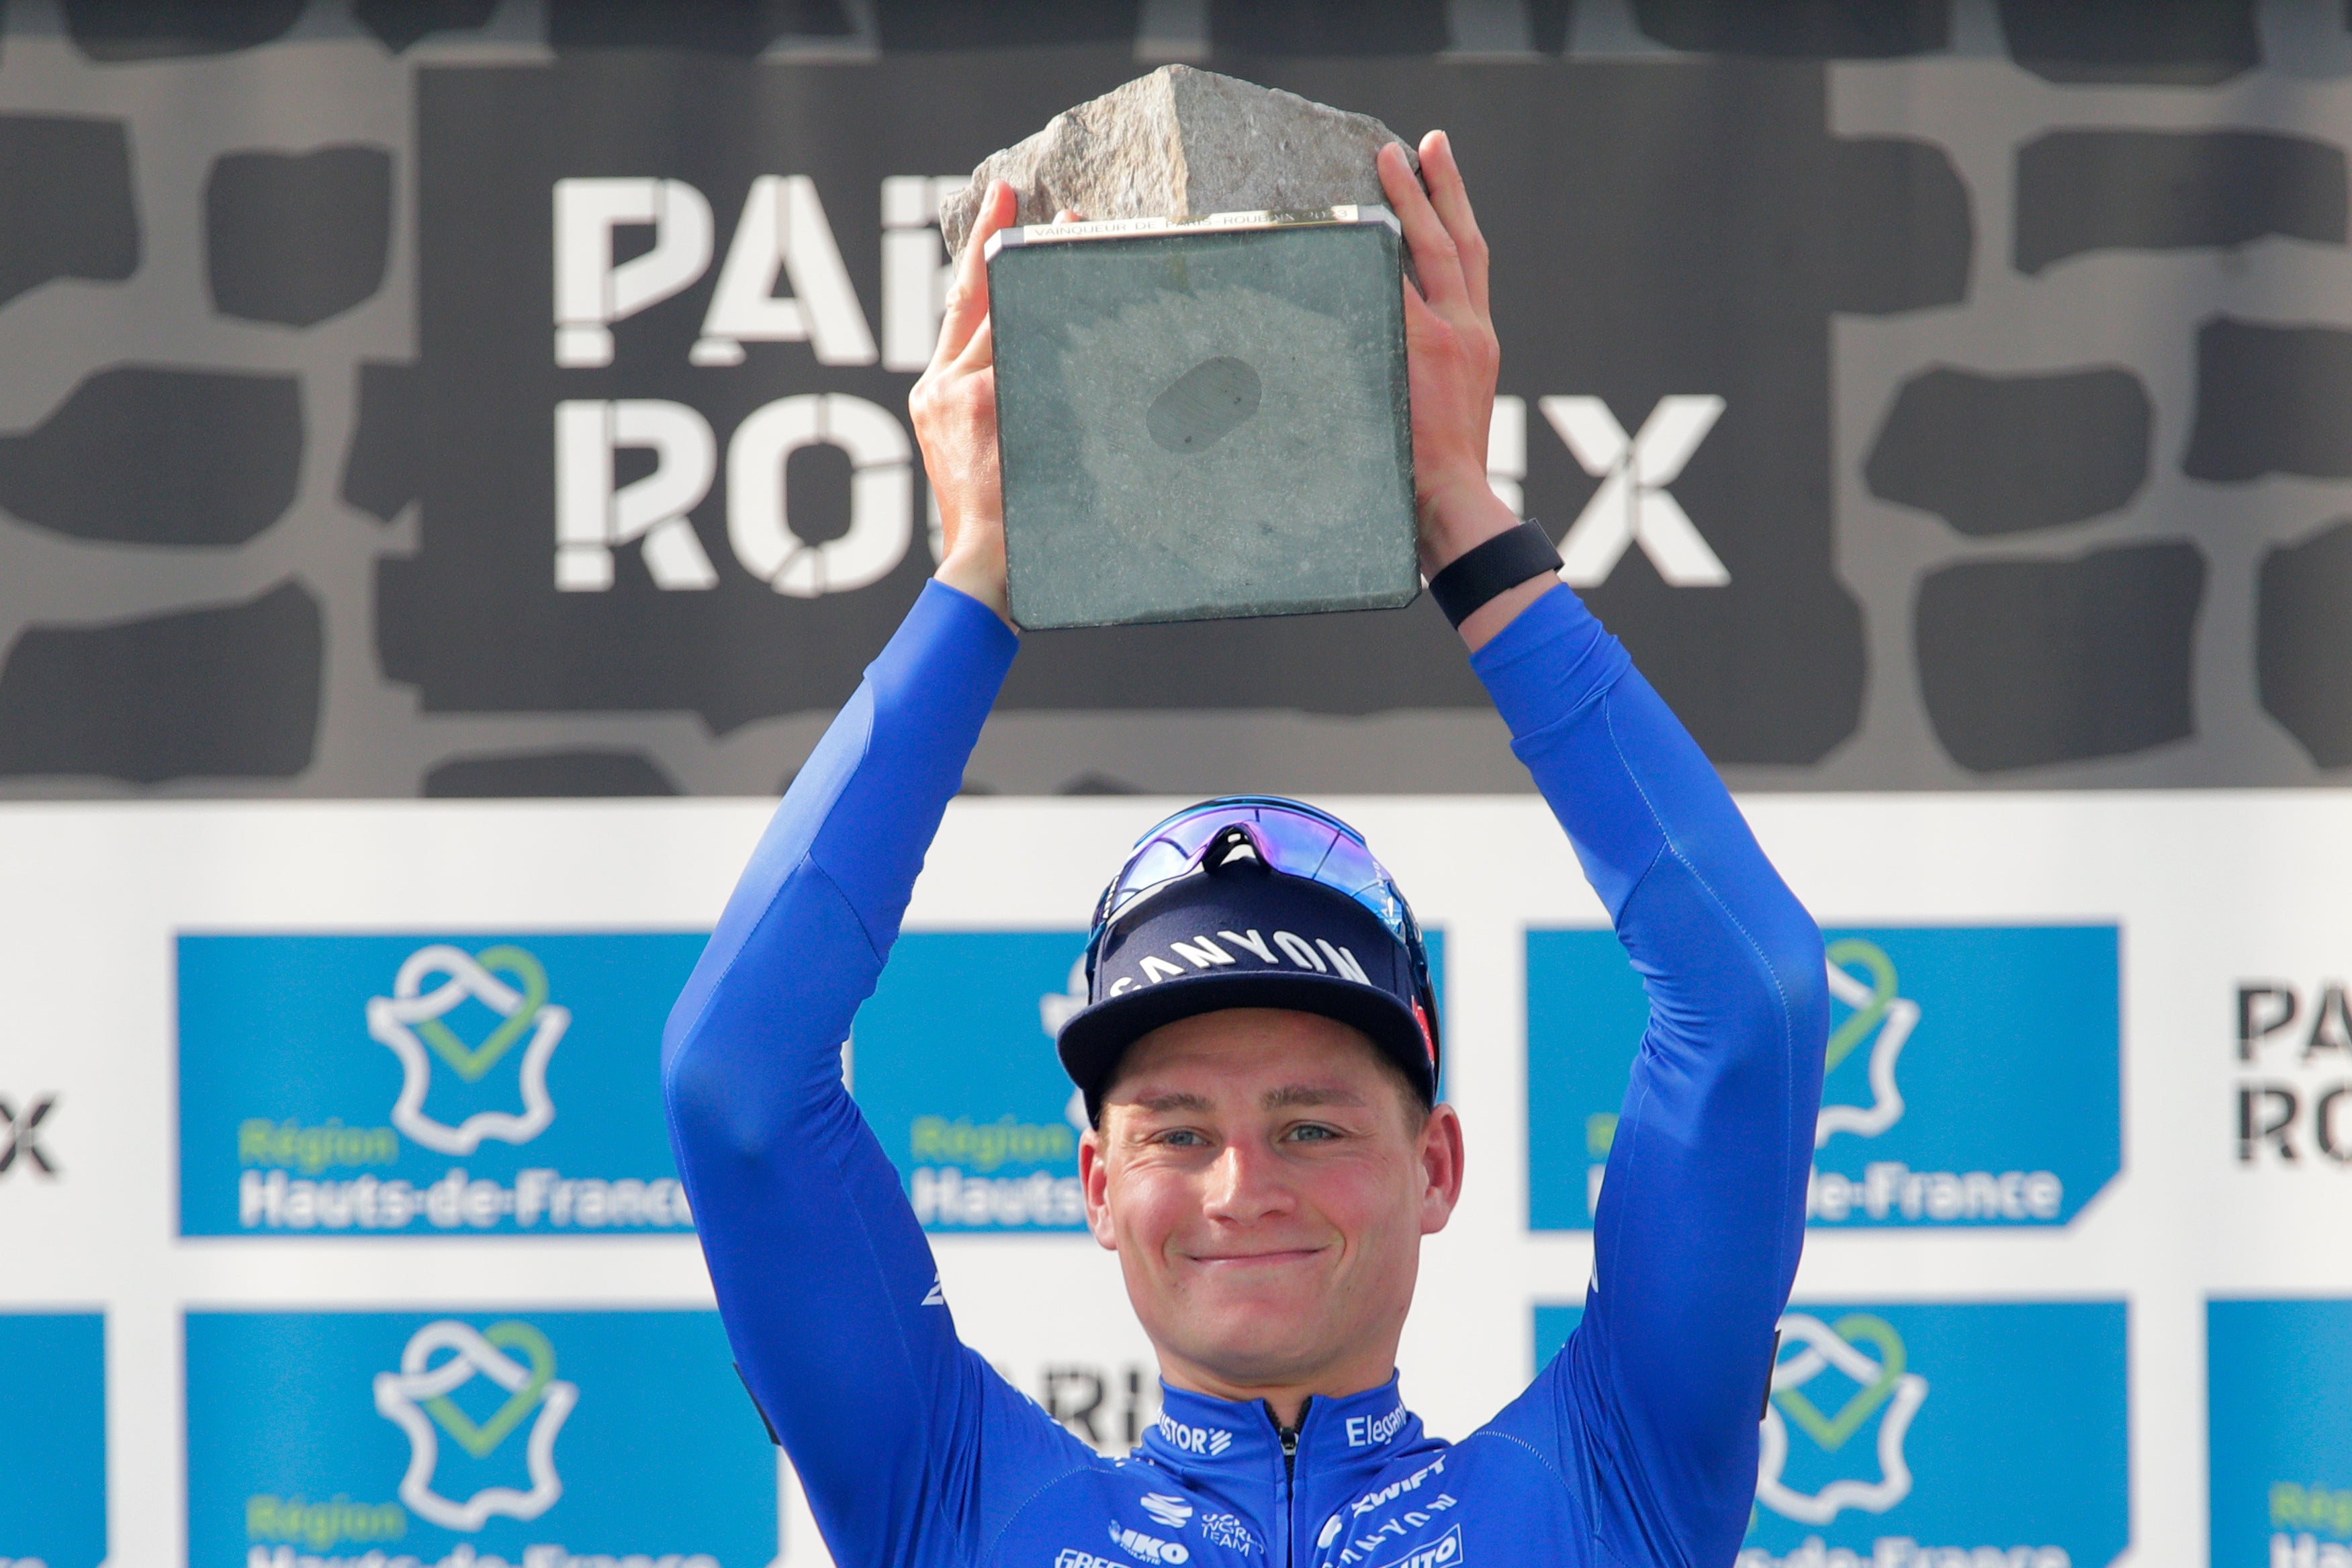 Mathieu van der Poel is hoping to retain his Paris-Roubaix crown